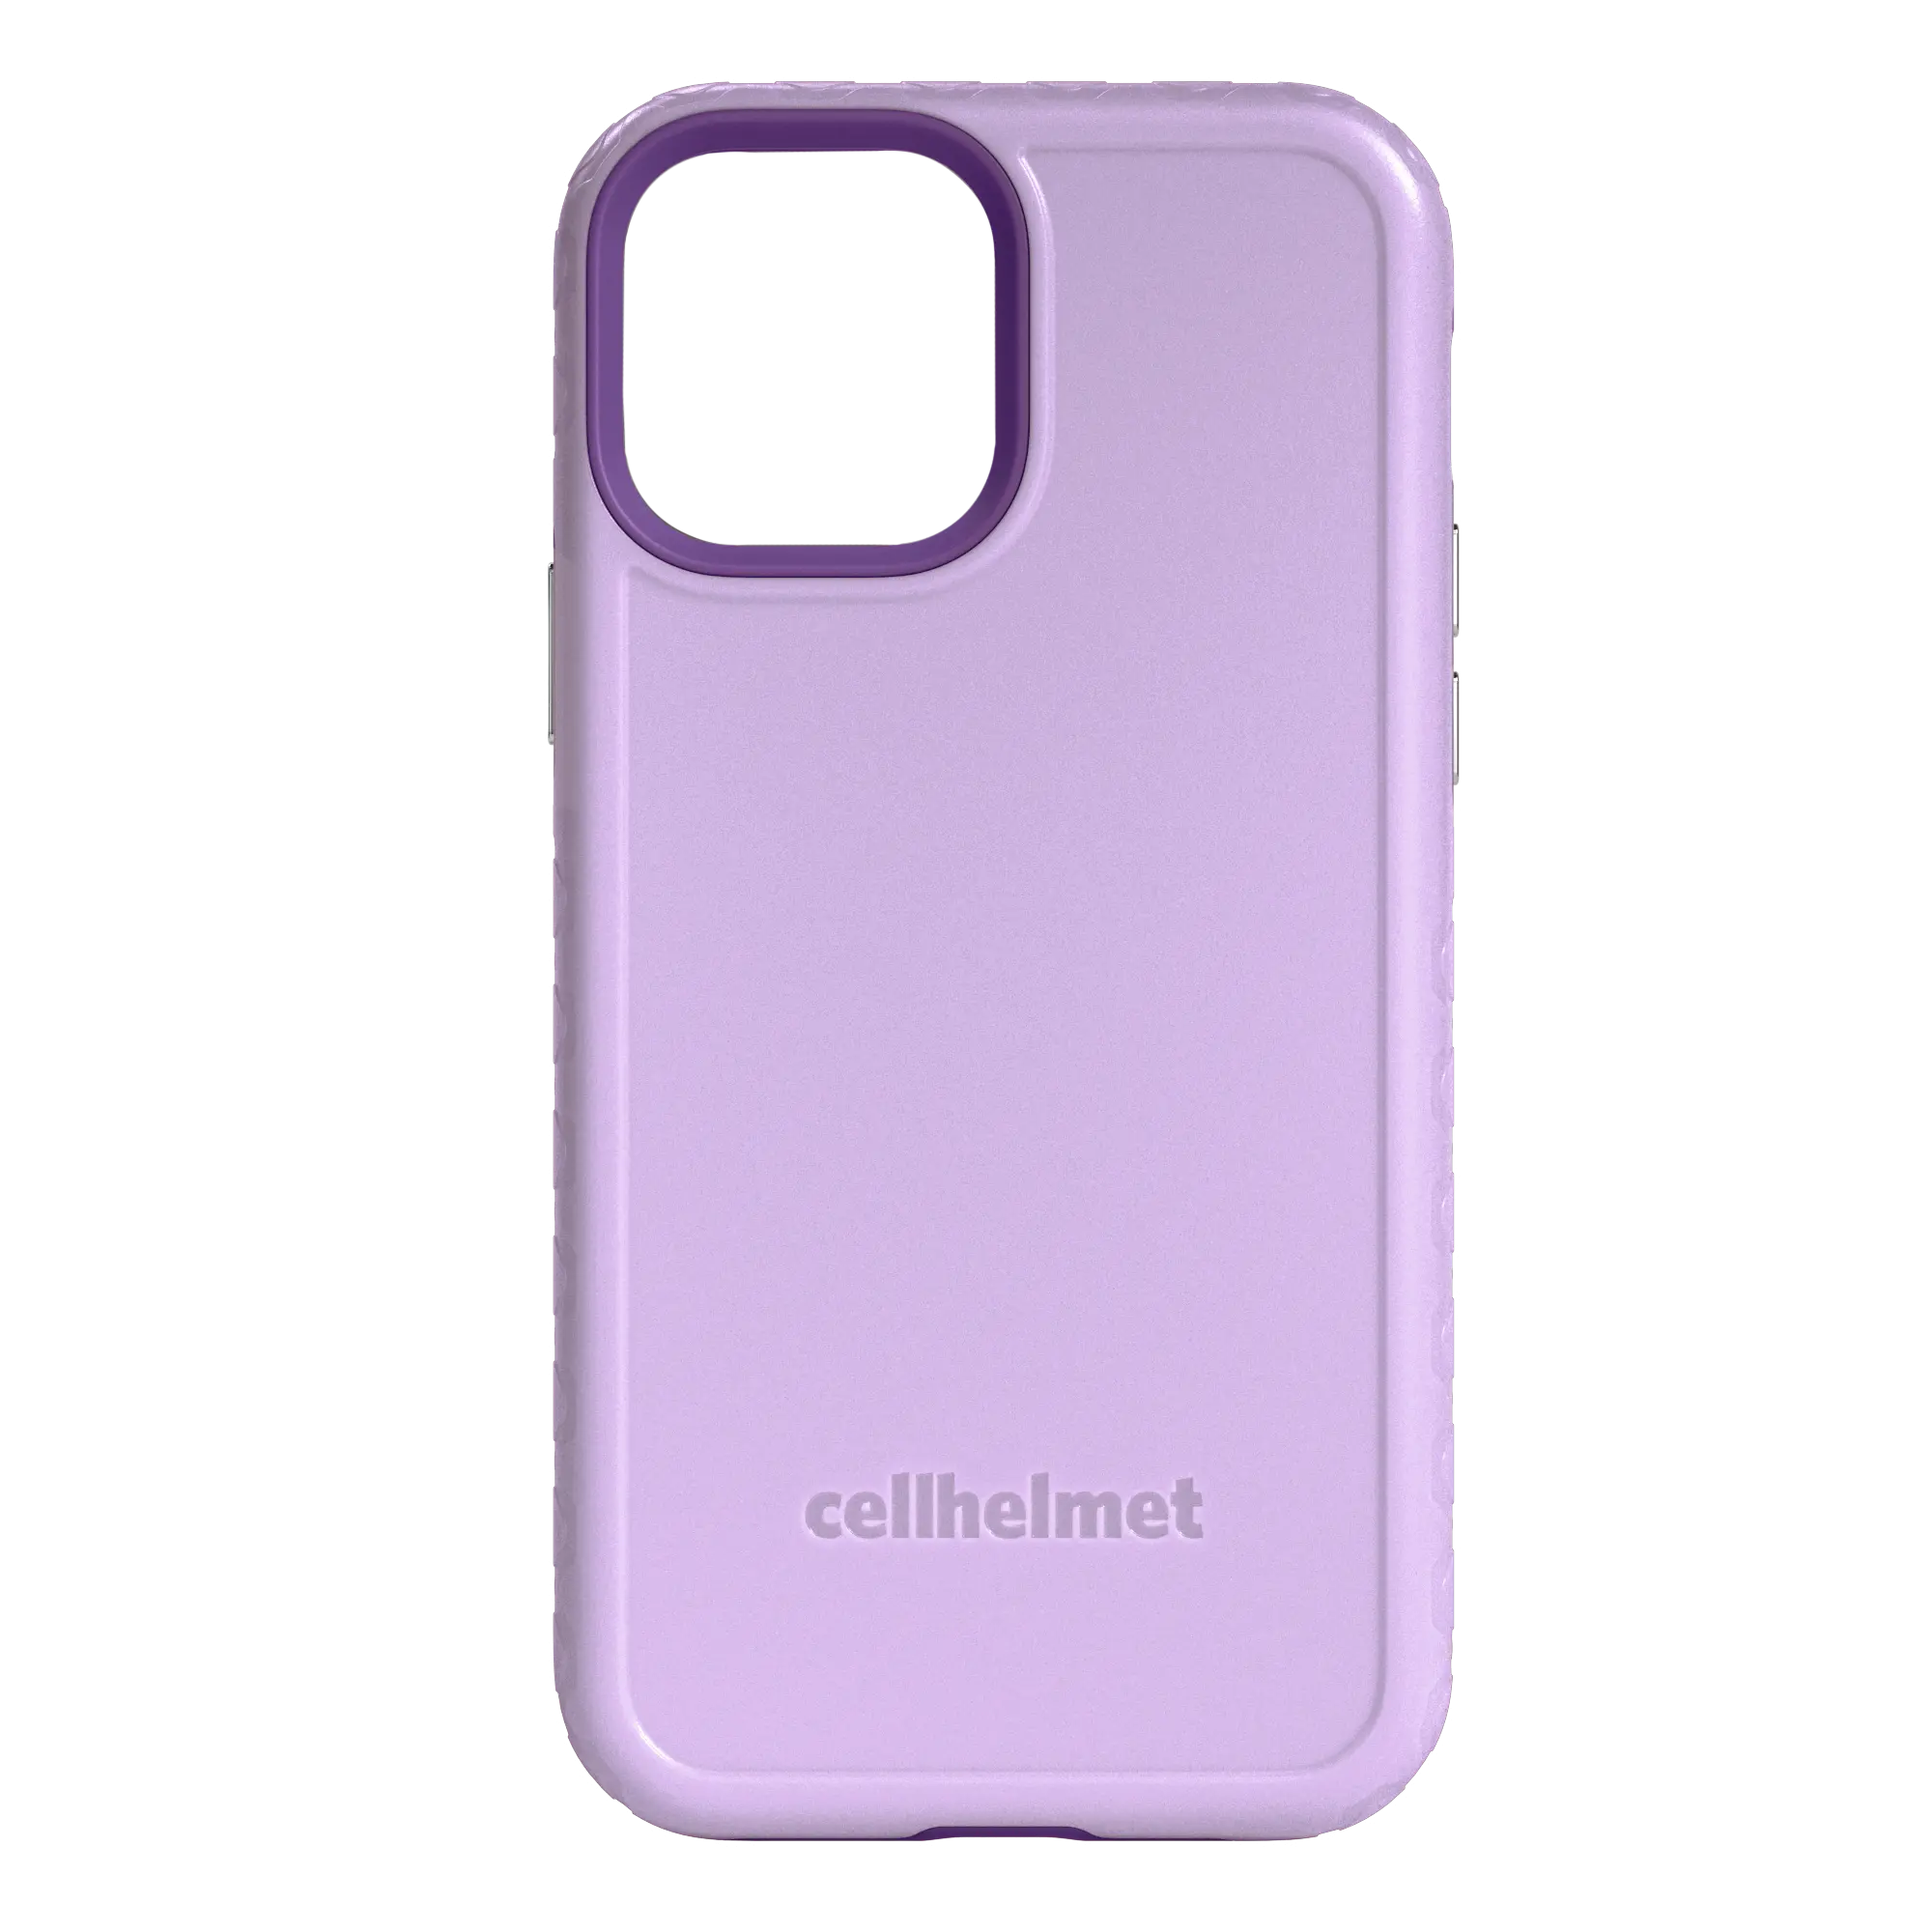 Purple cellhelmet Customizable Case for iPhone 12 Pro